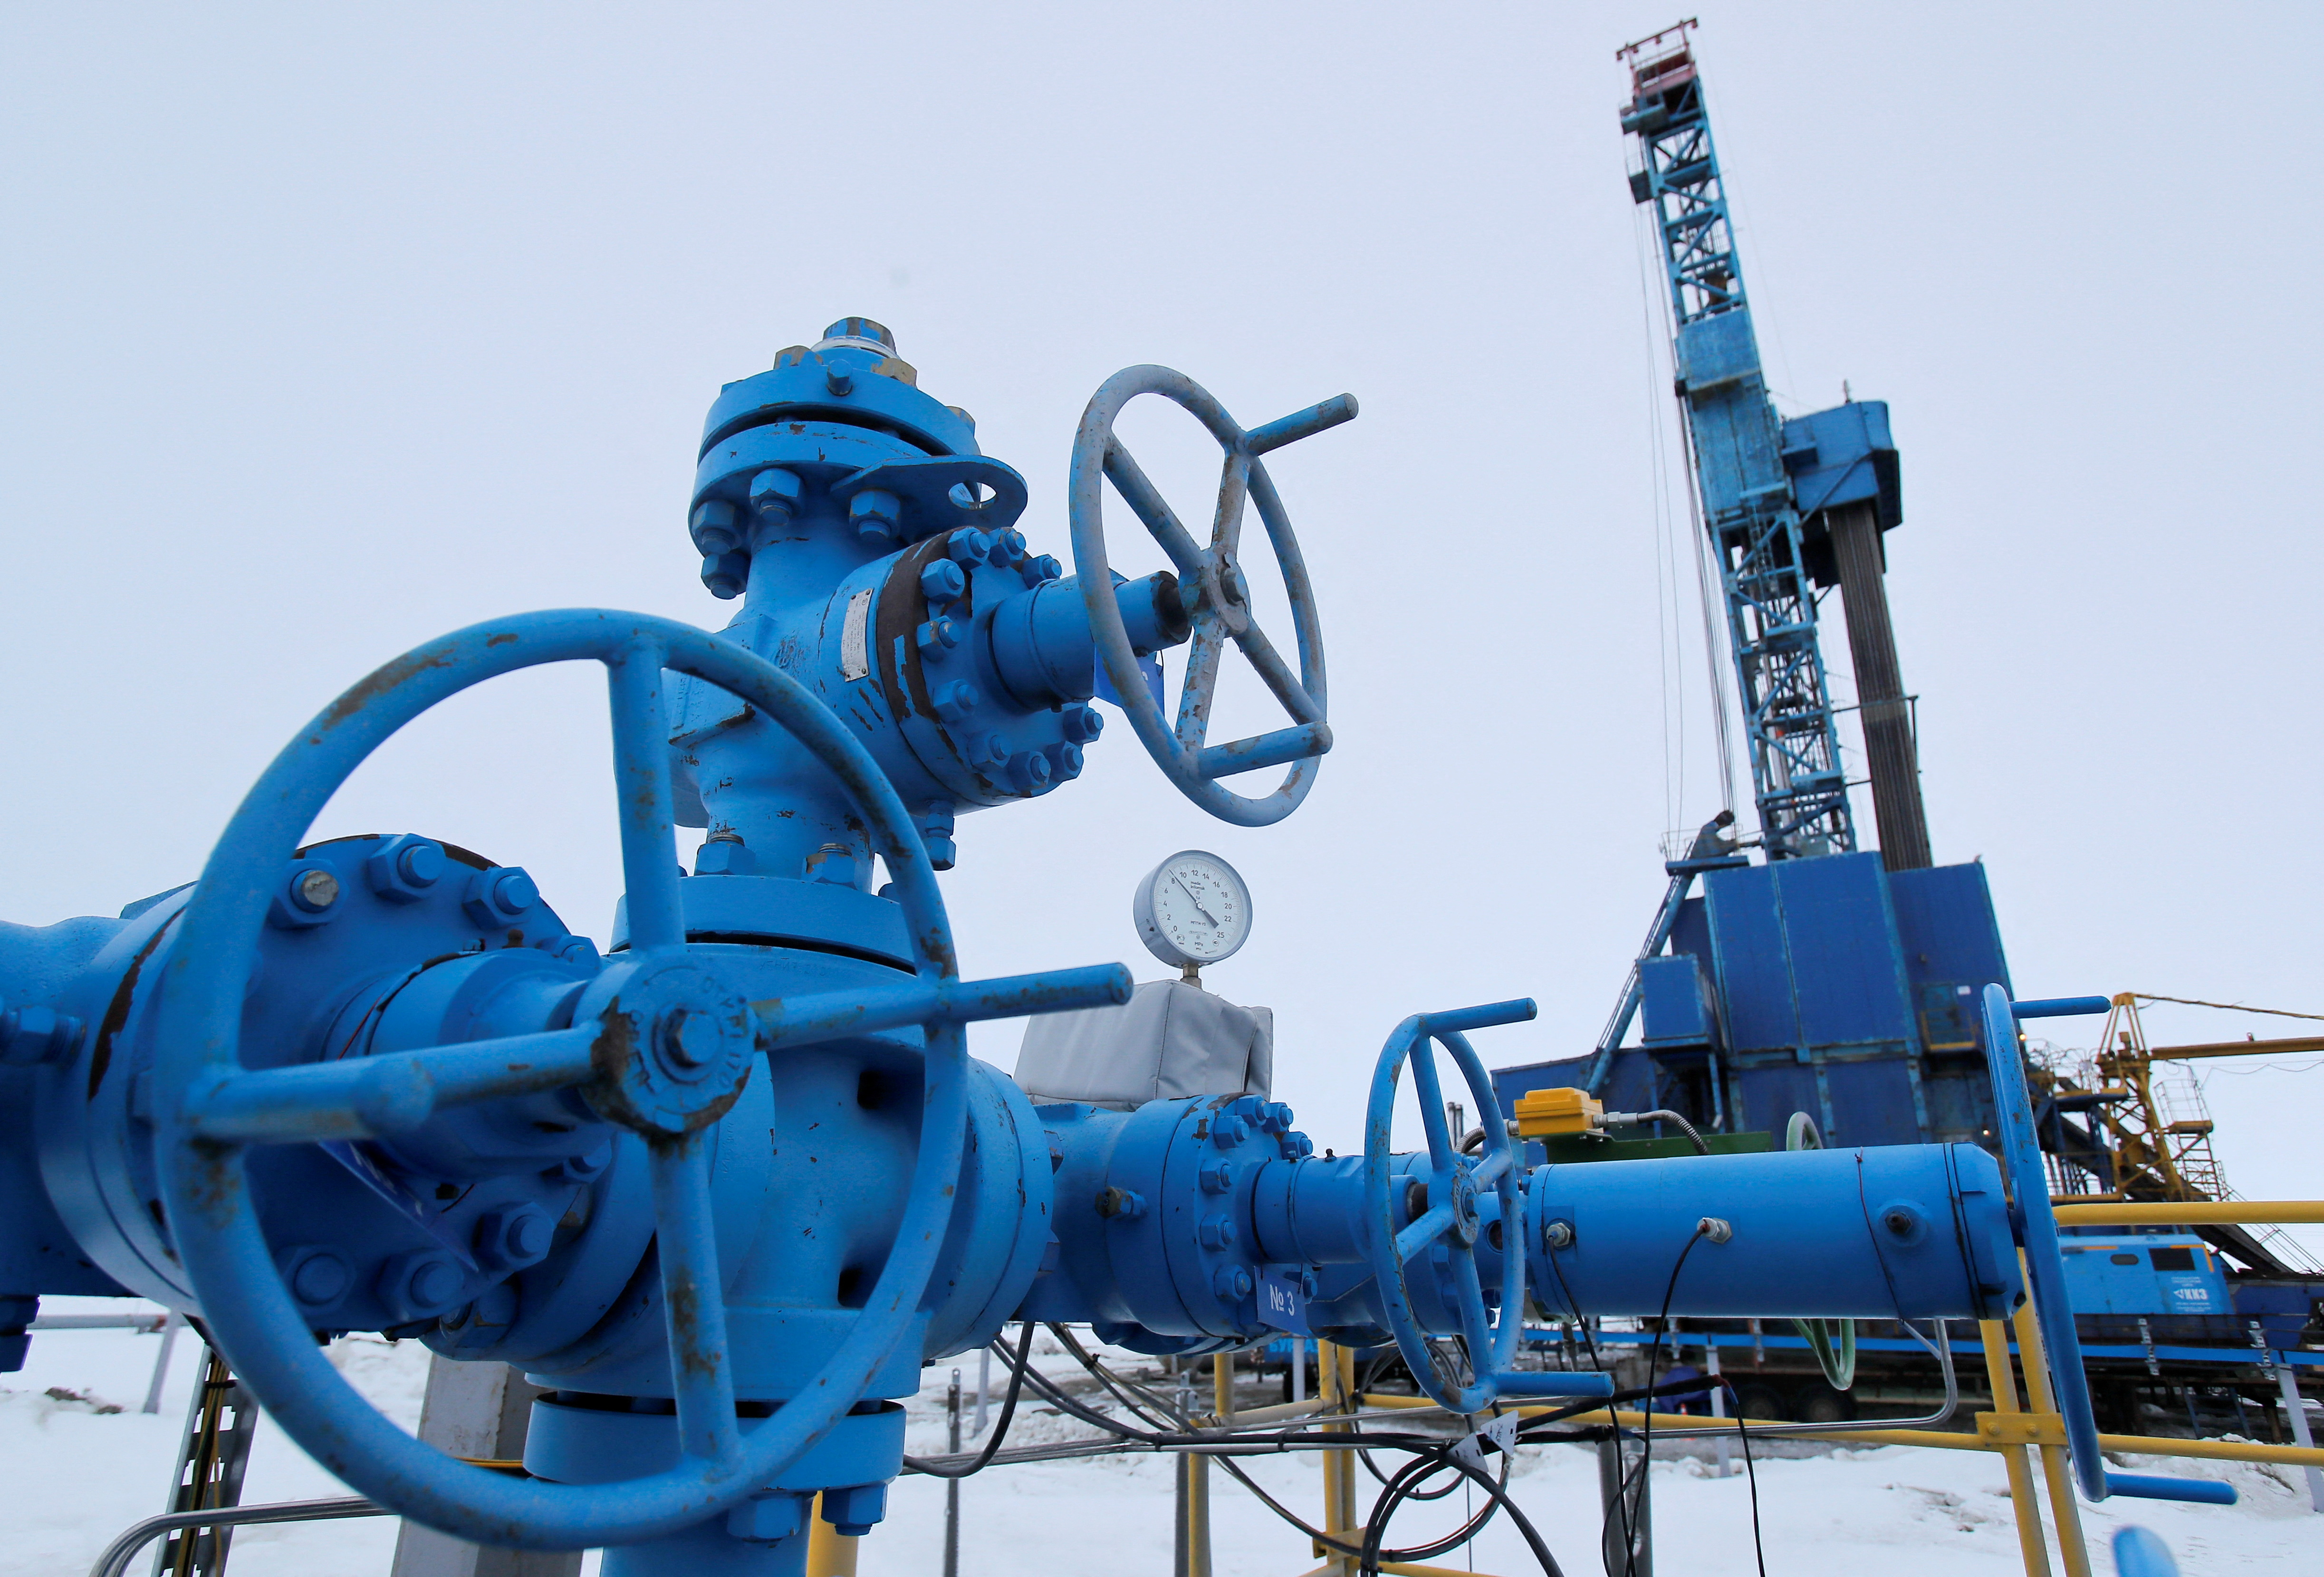 Gazprom's gas processing facility at Bovanenkovo gas field